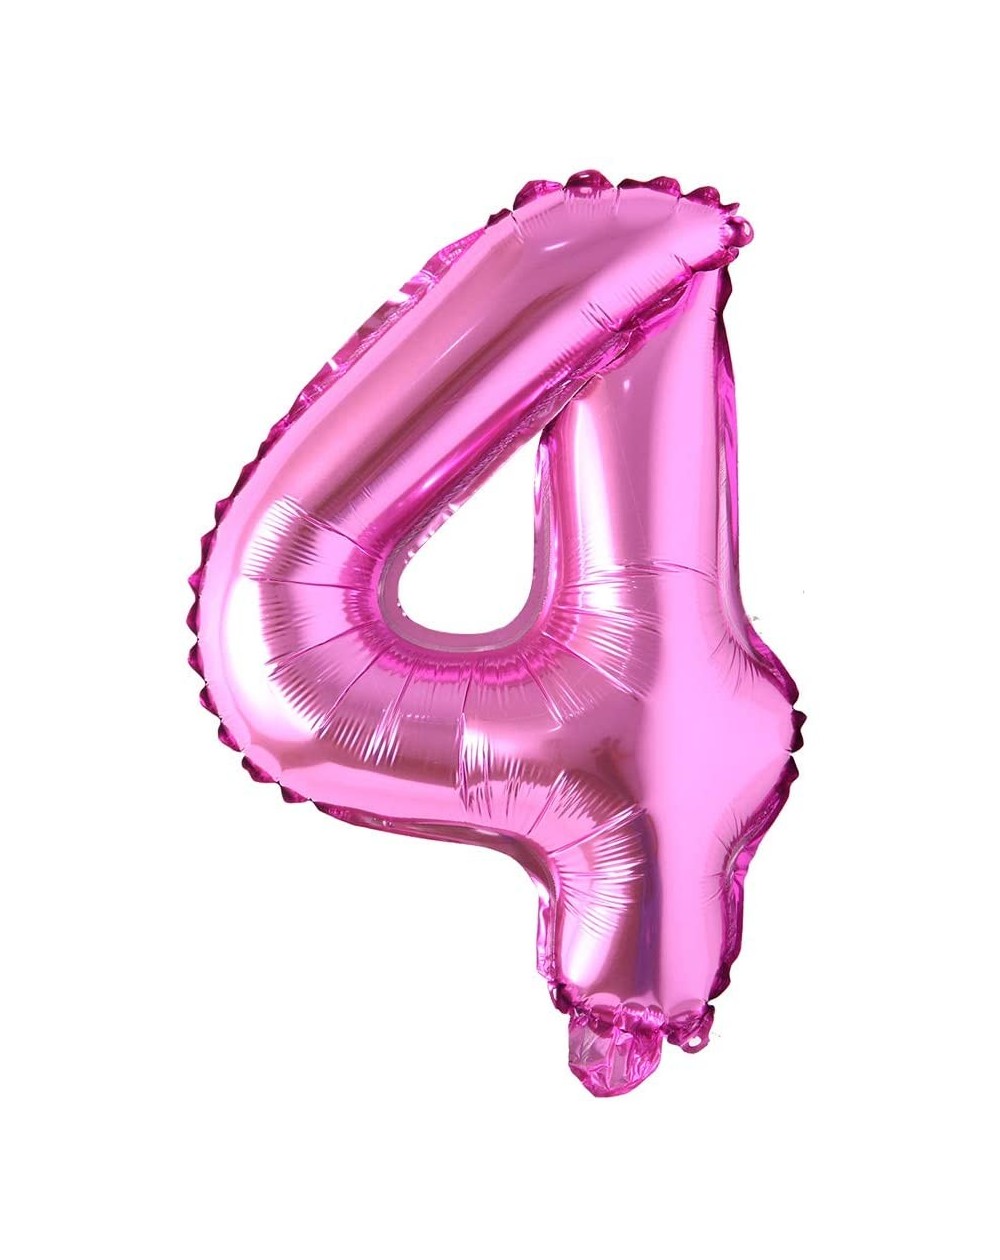 Balloons Rose Red 28 inch Letter Alphabet Number Balloons Foil Mylar Party Wedding Bachelorette Birthday Bridal Baby Shower G...